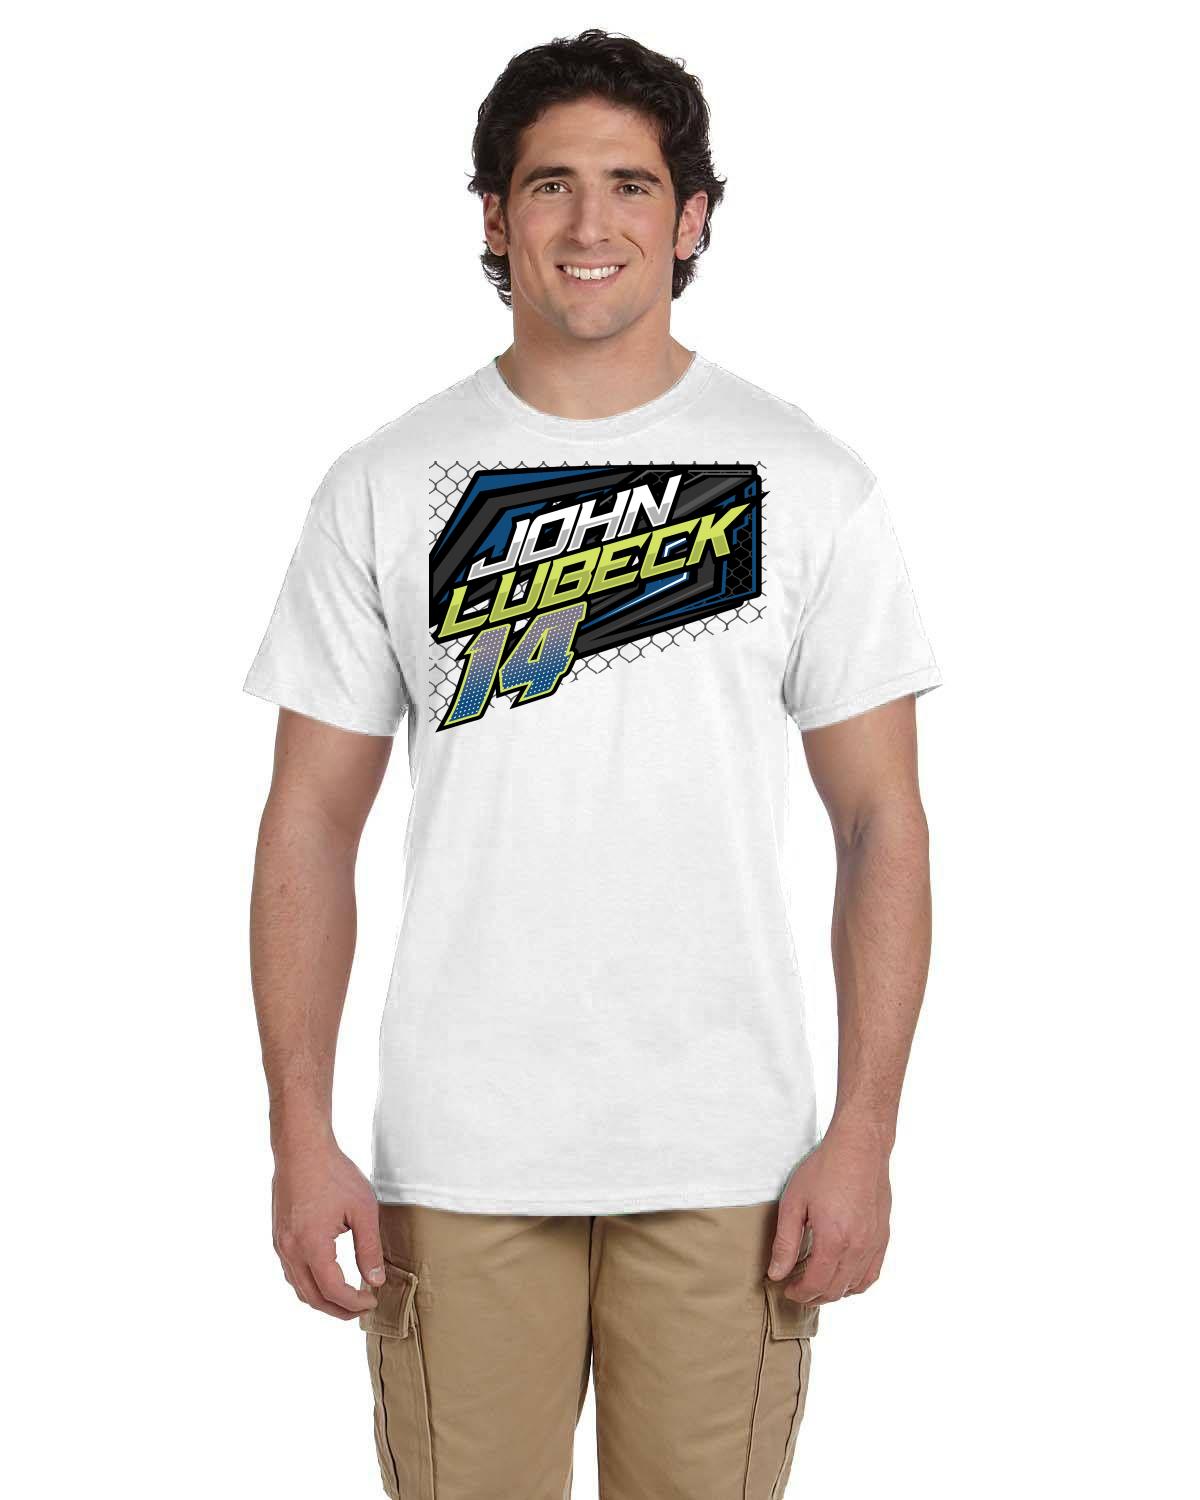 John Lubeck / Upfront Motorsports Adult T-Shirt